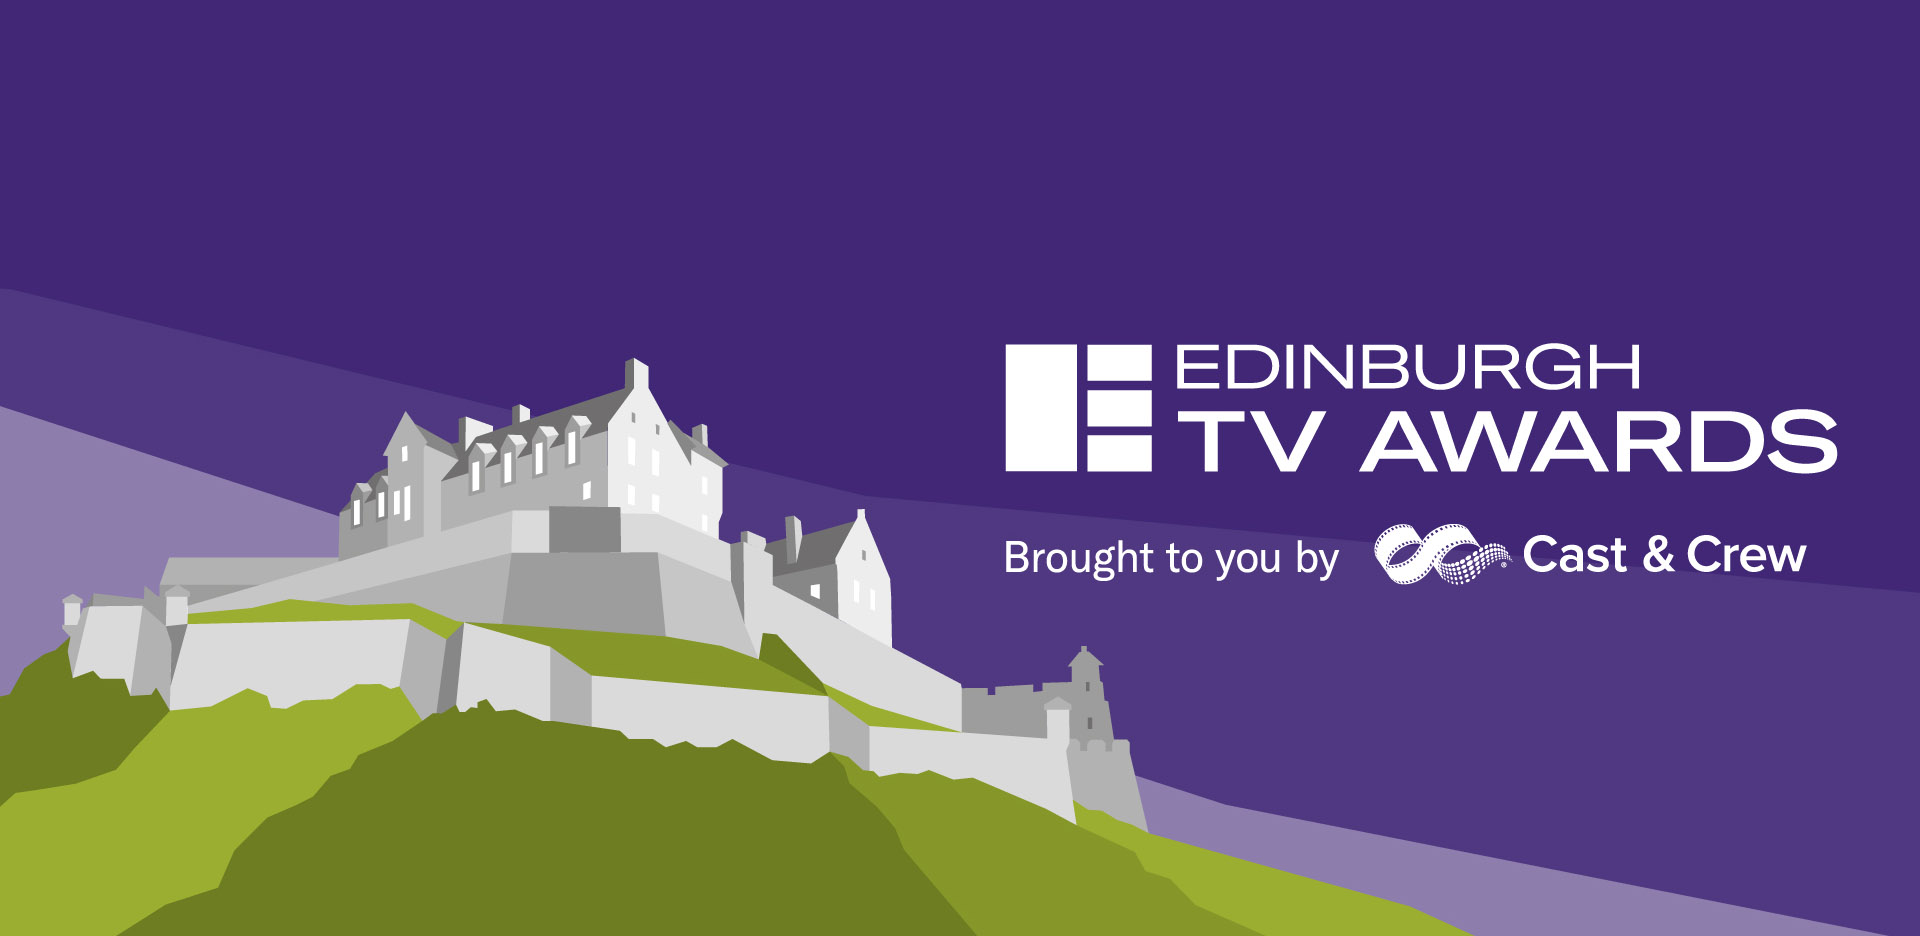 Edinburgh-TV-awards-banner_1920x650px_01_EDITED